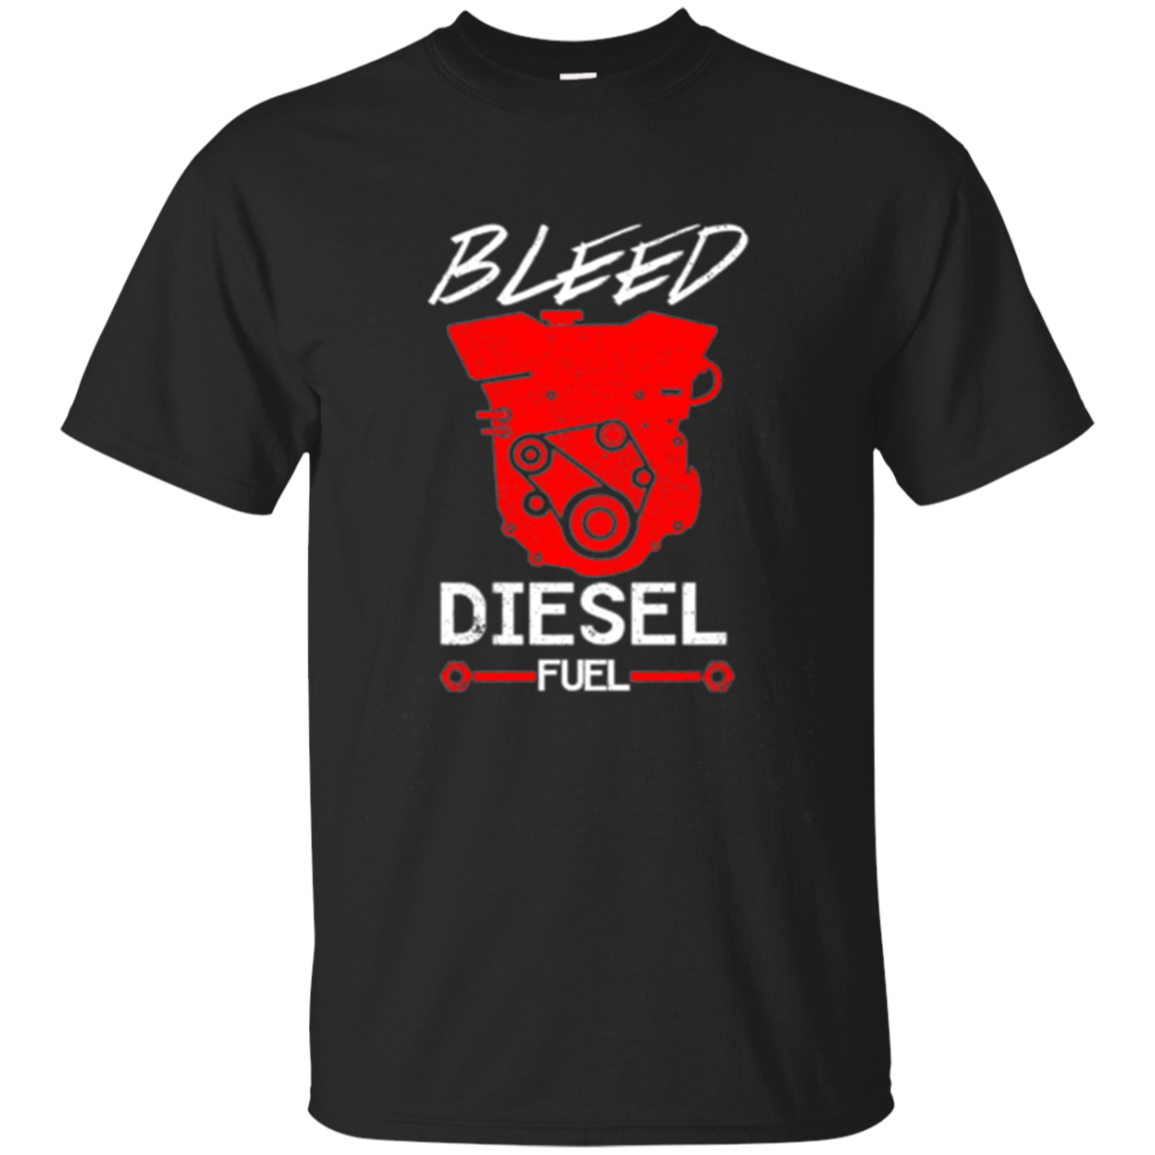 Bleed Diesel Fuel - 4x4 Power Off Road Truck Longsleeve Shirts